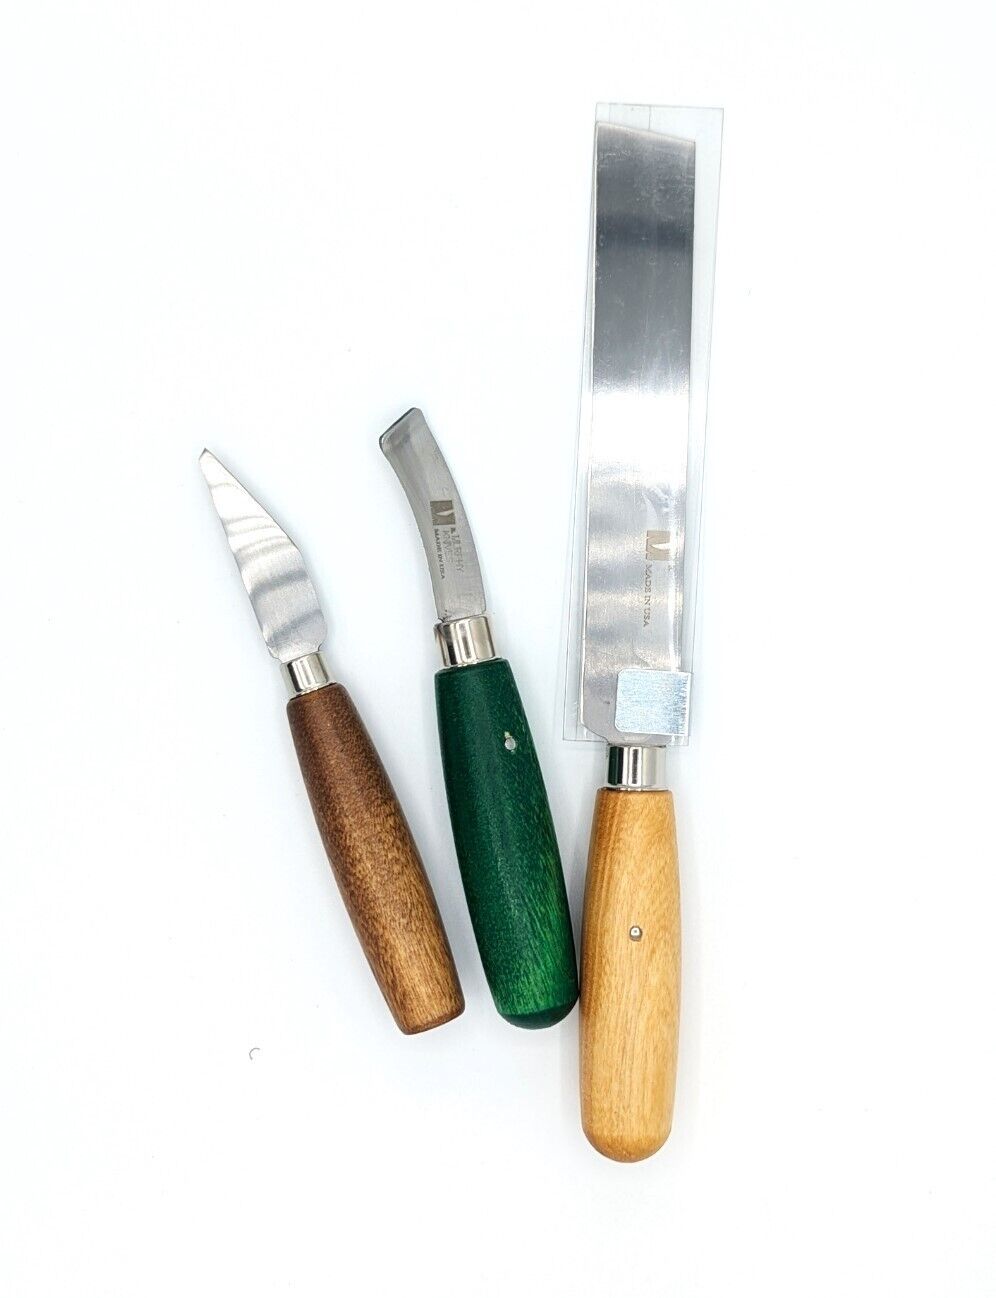 KNIVES For SHOE REPAIR / R. Murphy & Dexter Knives / Shoe Making Knives